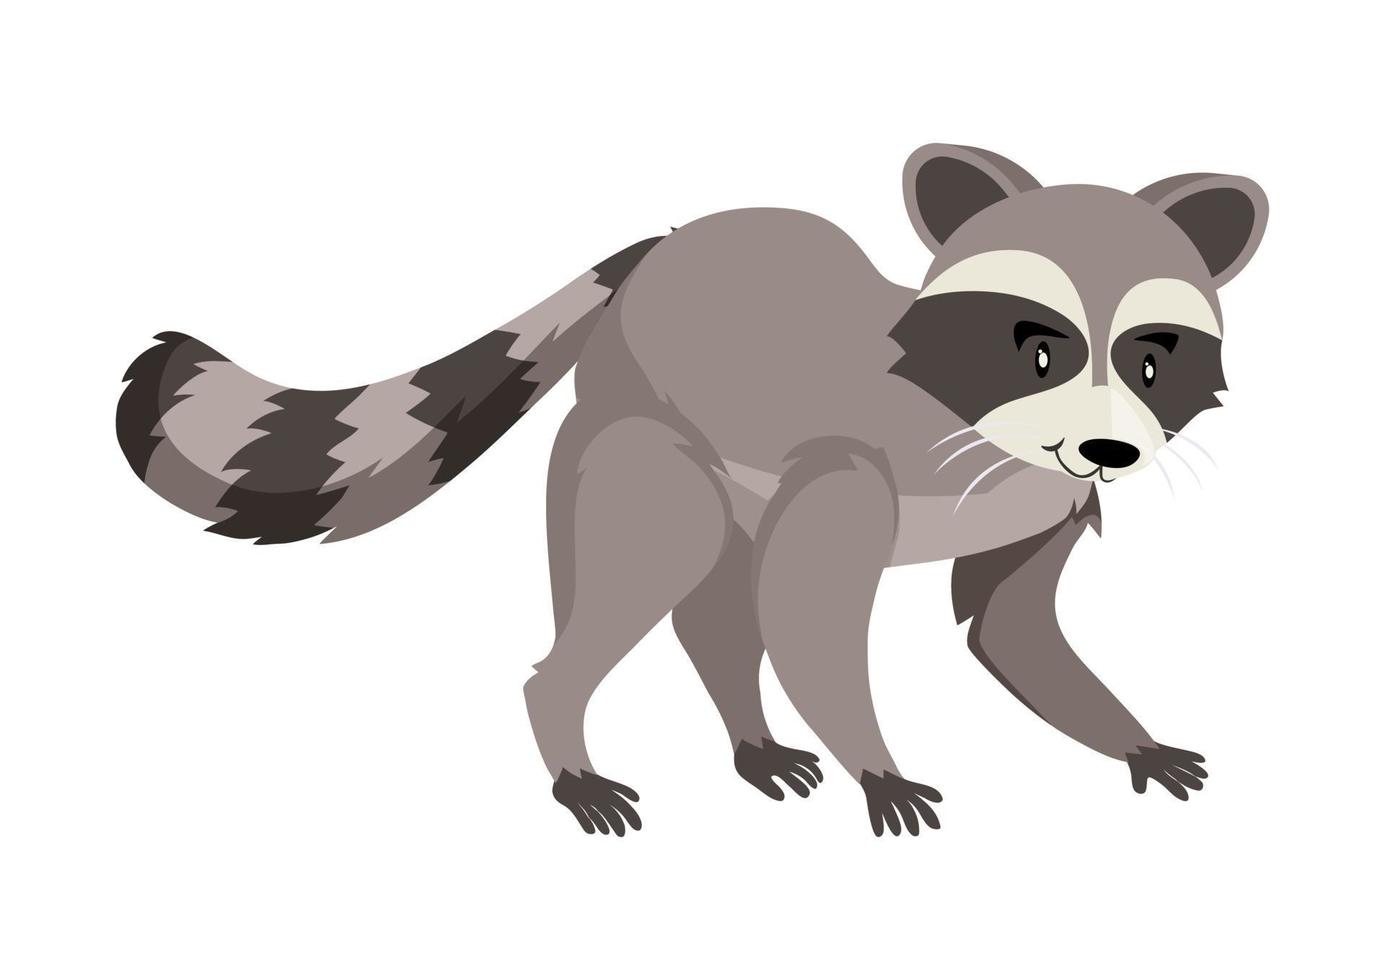 Cute Raccoon Cartoon Vector Graphics. Raccoon on white background